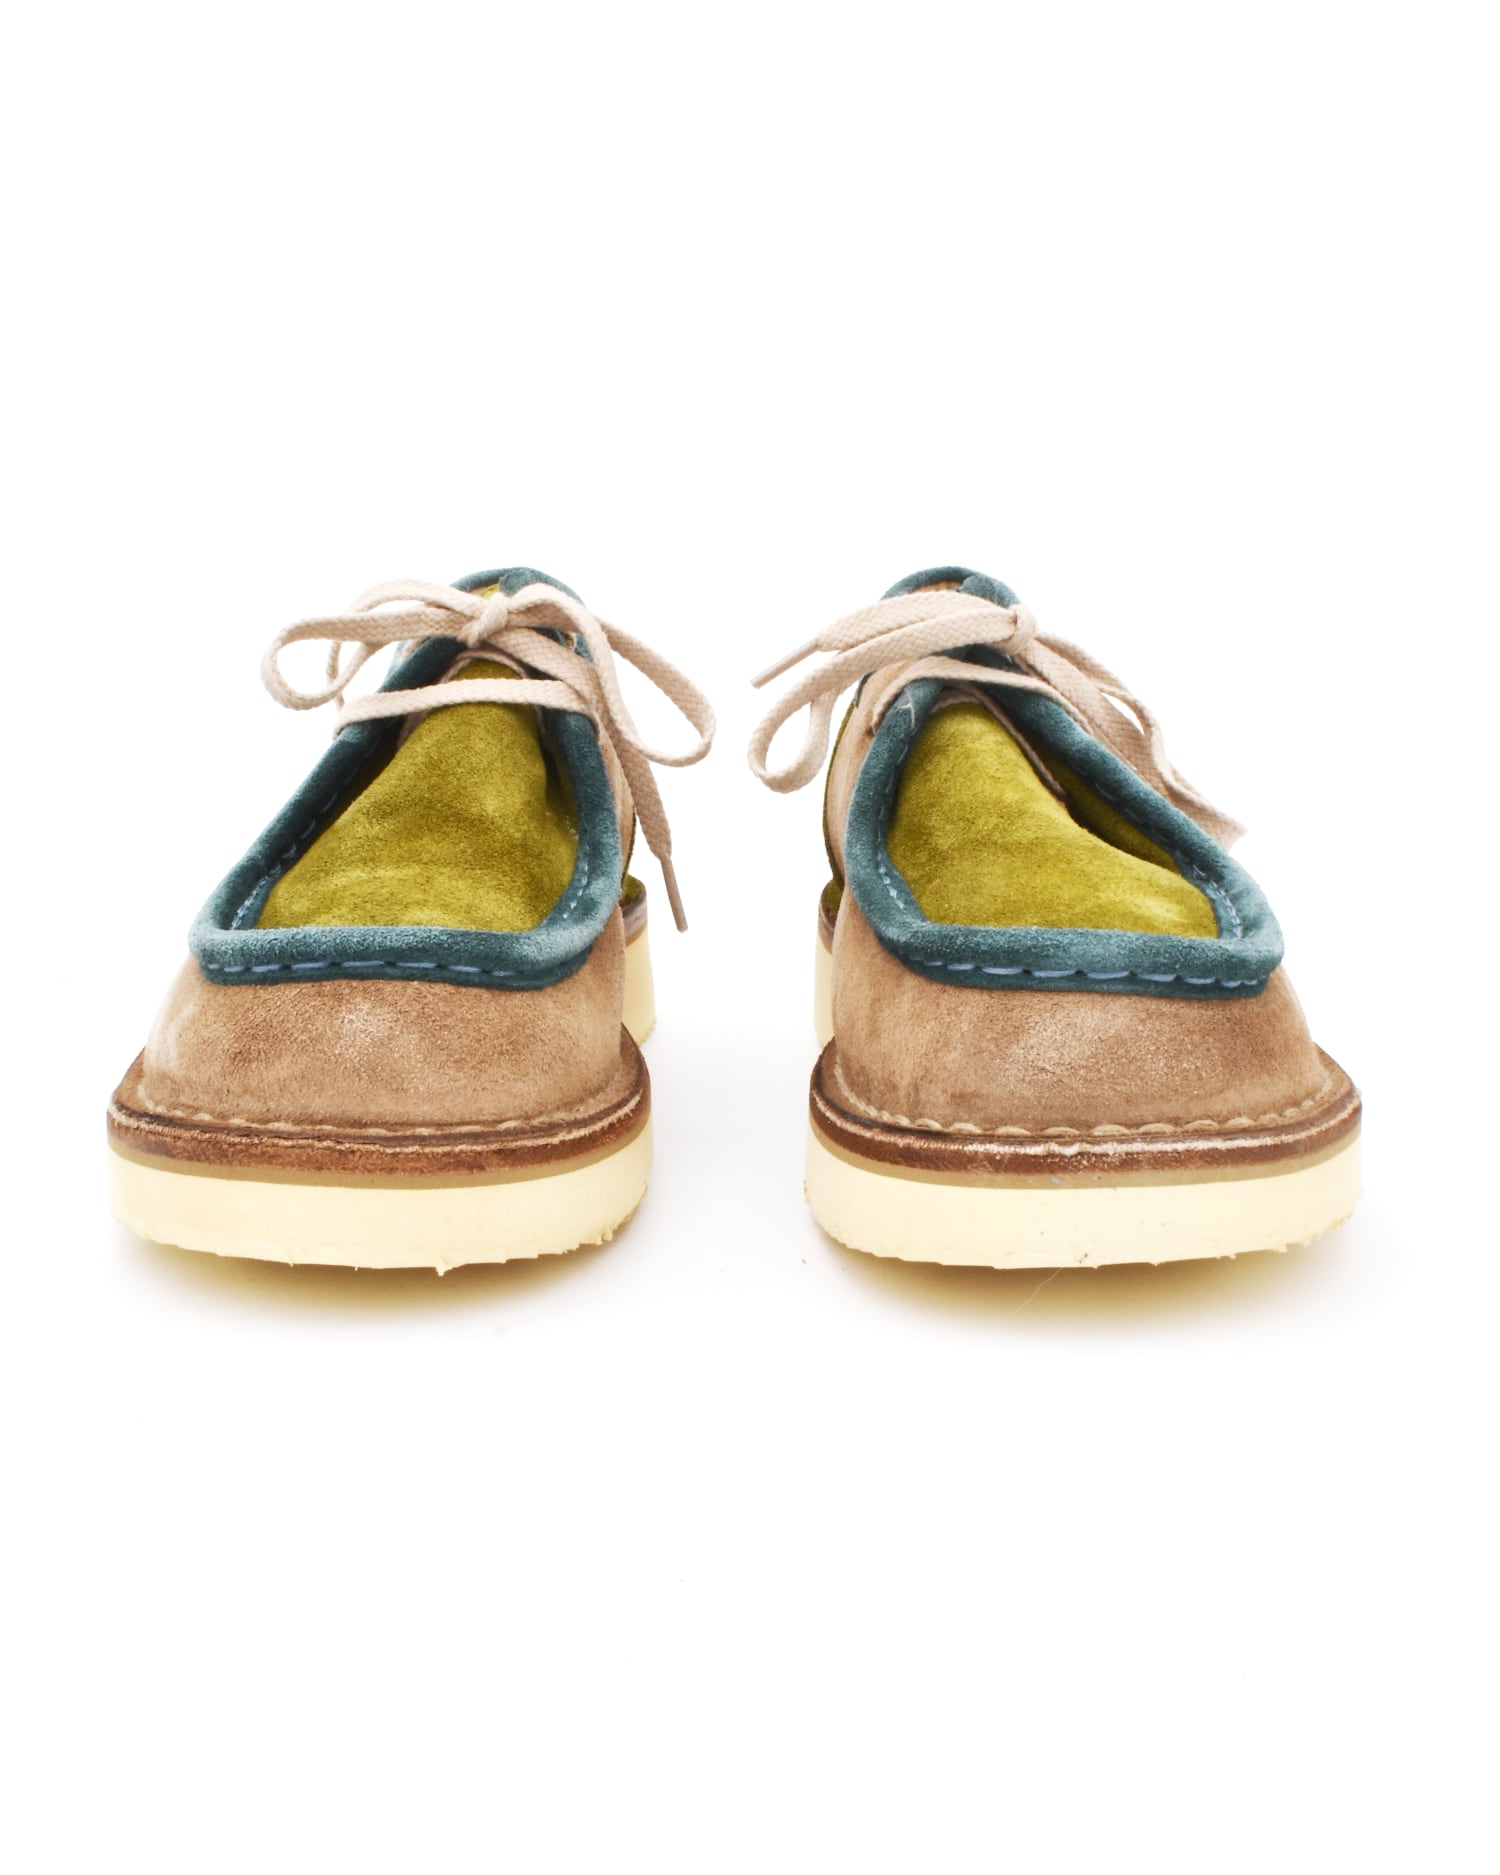 Beenflex Multi-Color Tyrolean Shoe